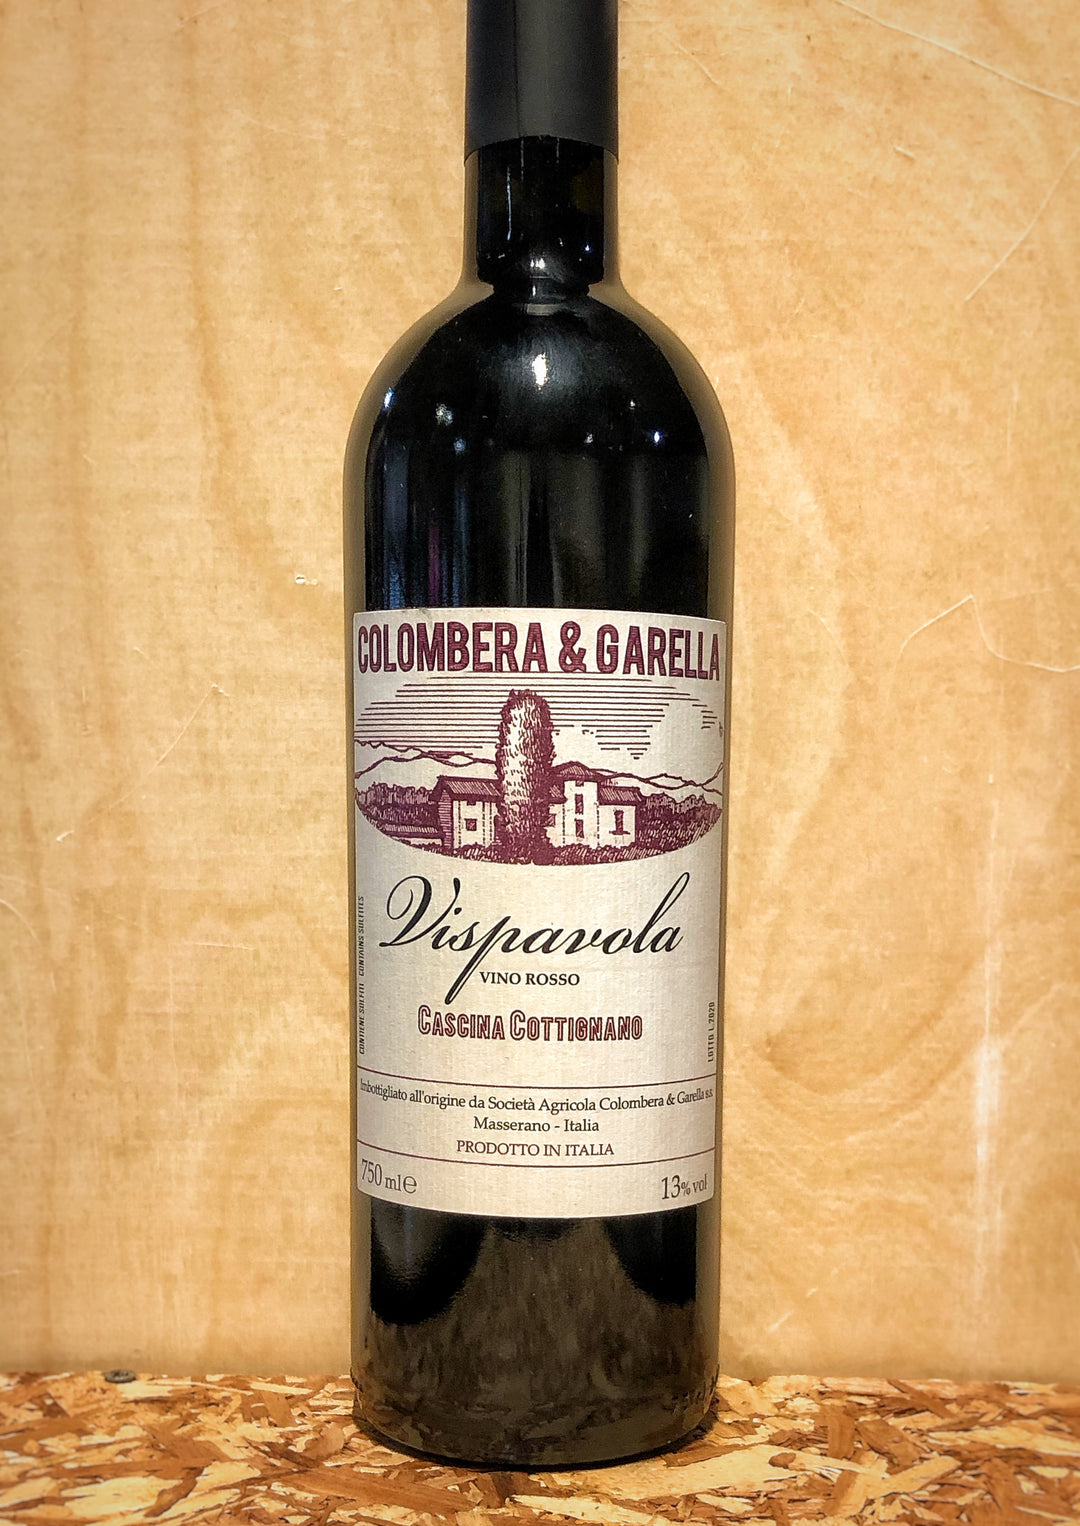 Colombera & Garella Cascina Cottignano 'Vispavola' Vino Rosso 2020 (Piedmont, Italy)